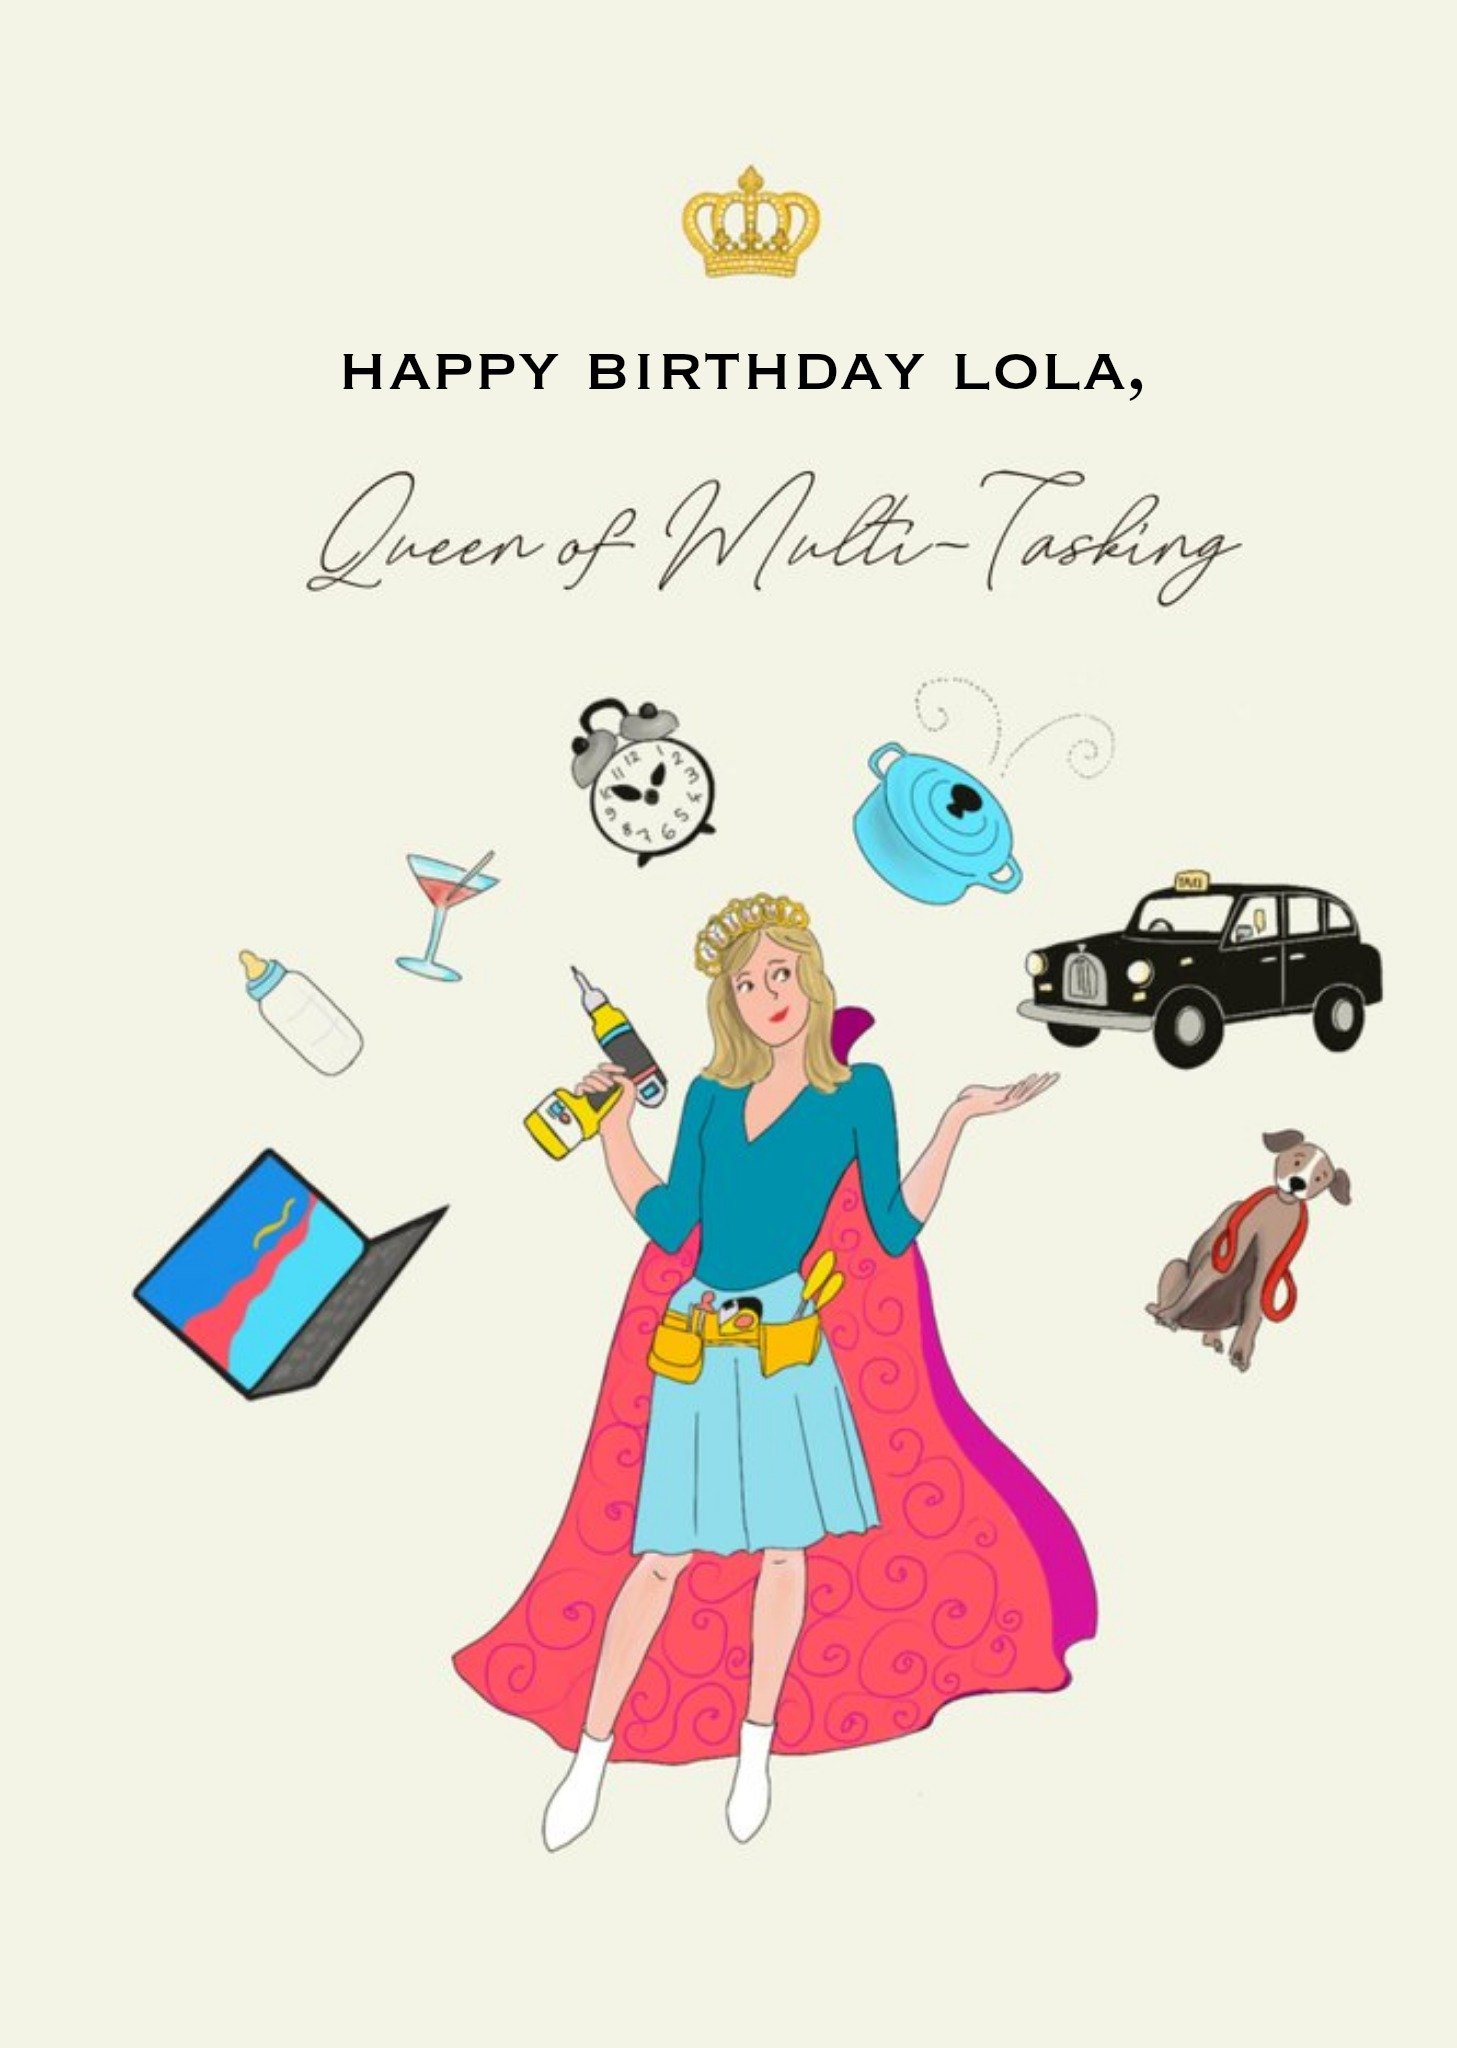 Moonpig Illustration Of The Queen Of Multi Tasking Happy Birthday Card Ecard